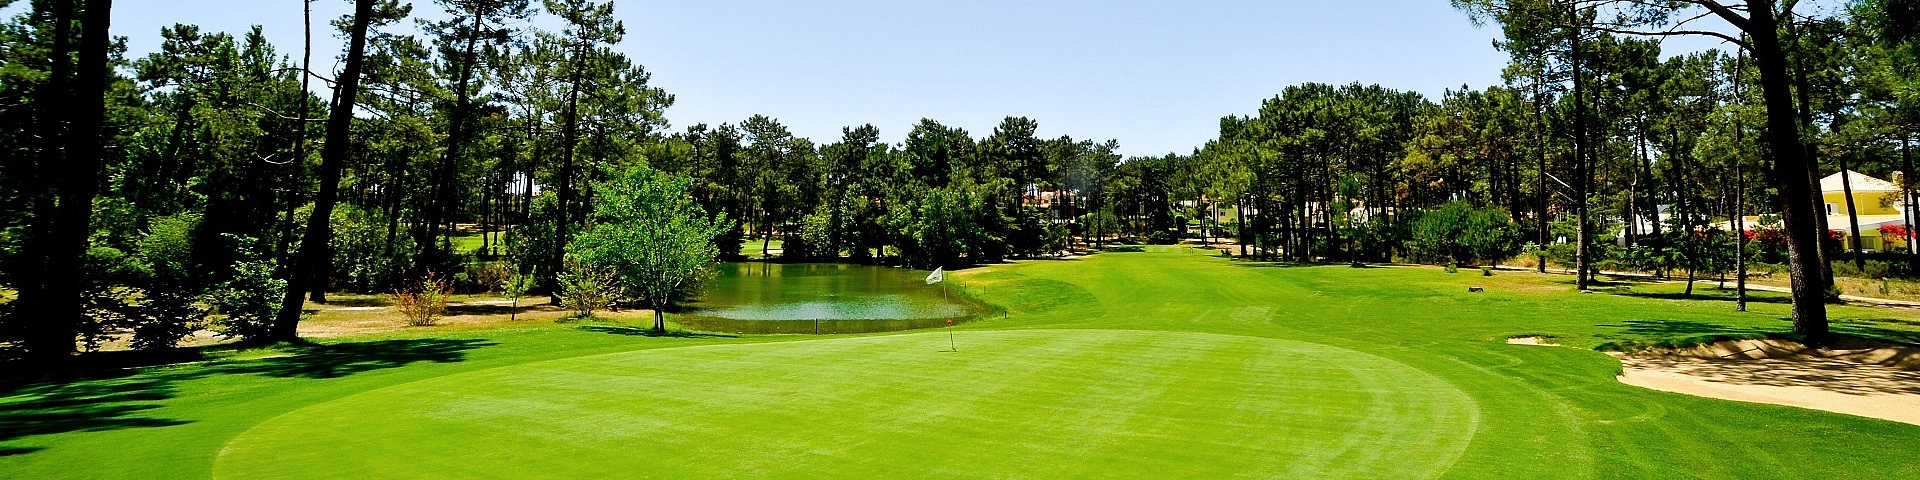 Aroeira Golf Courses | Aroeira Pines Classic